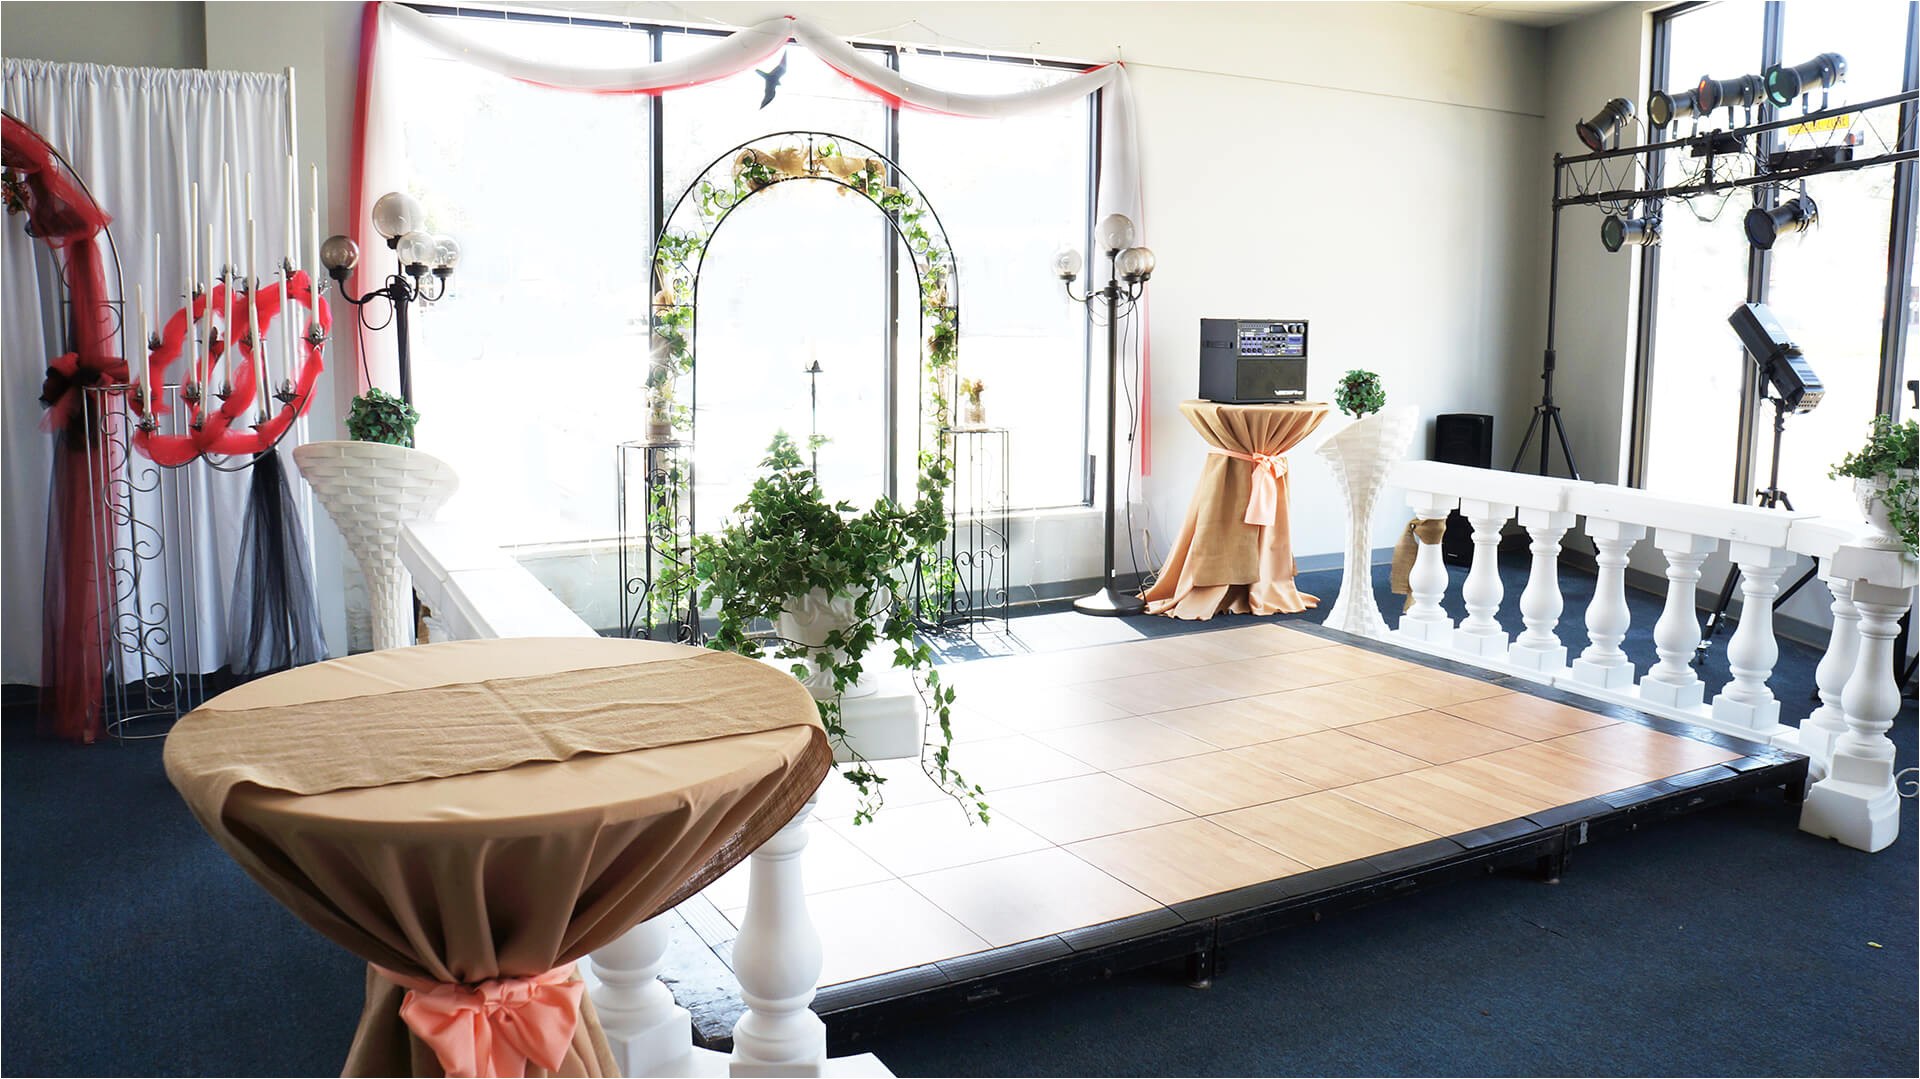 Office Furniture Stores Gulfport Ms Milner Rental Center Premium Wedding Party and Equipment Rentals